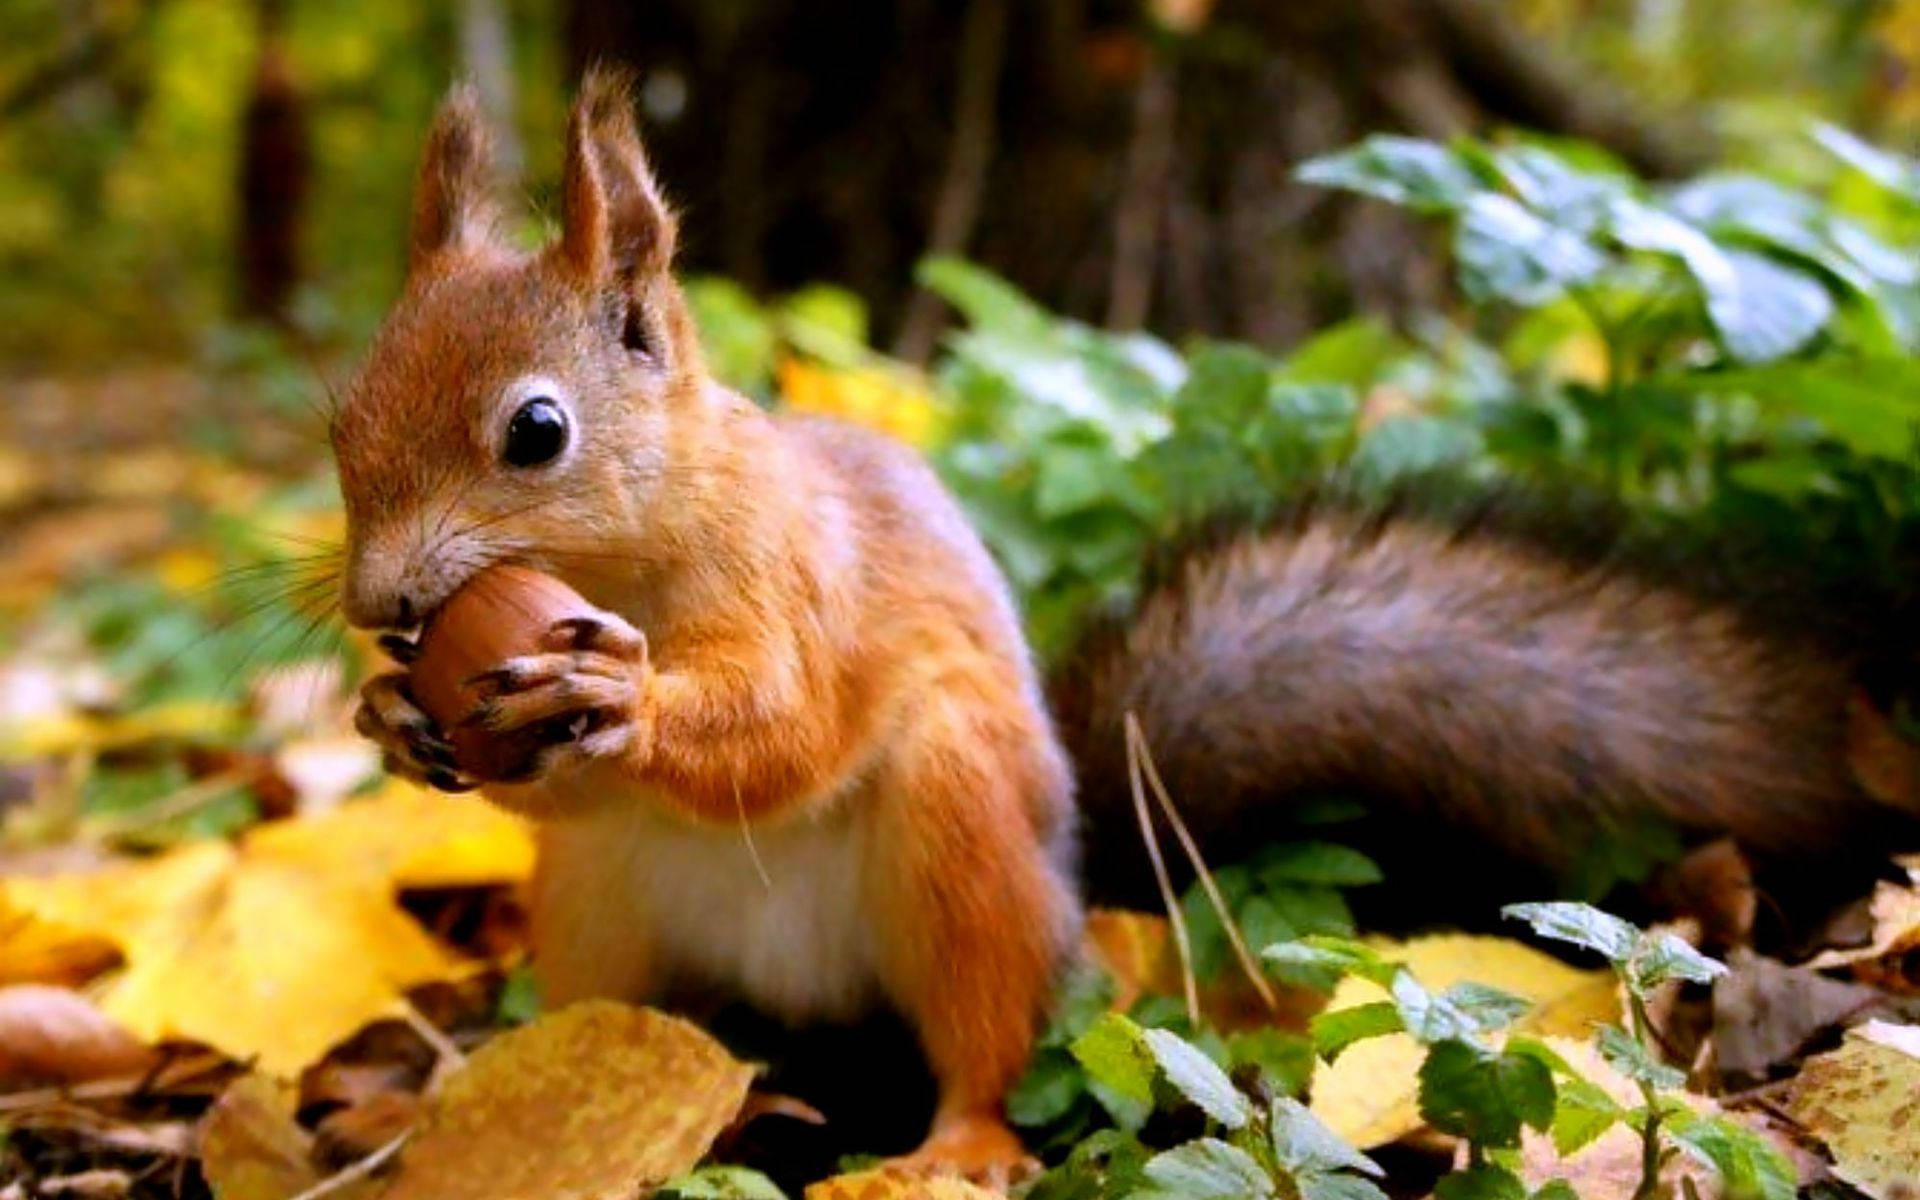 Squirrel Eating Food